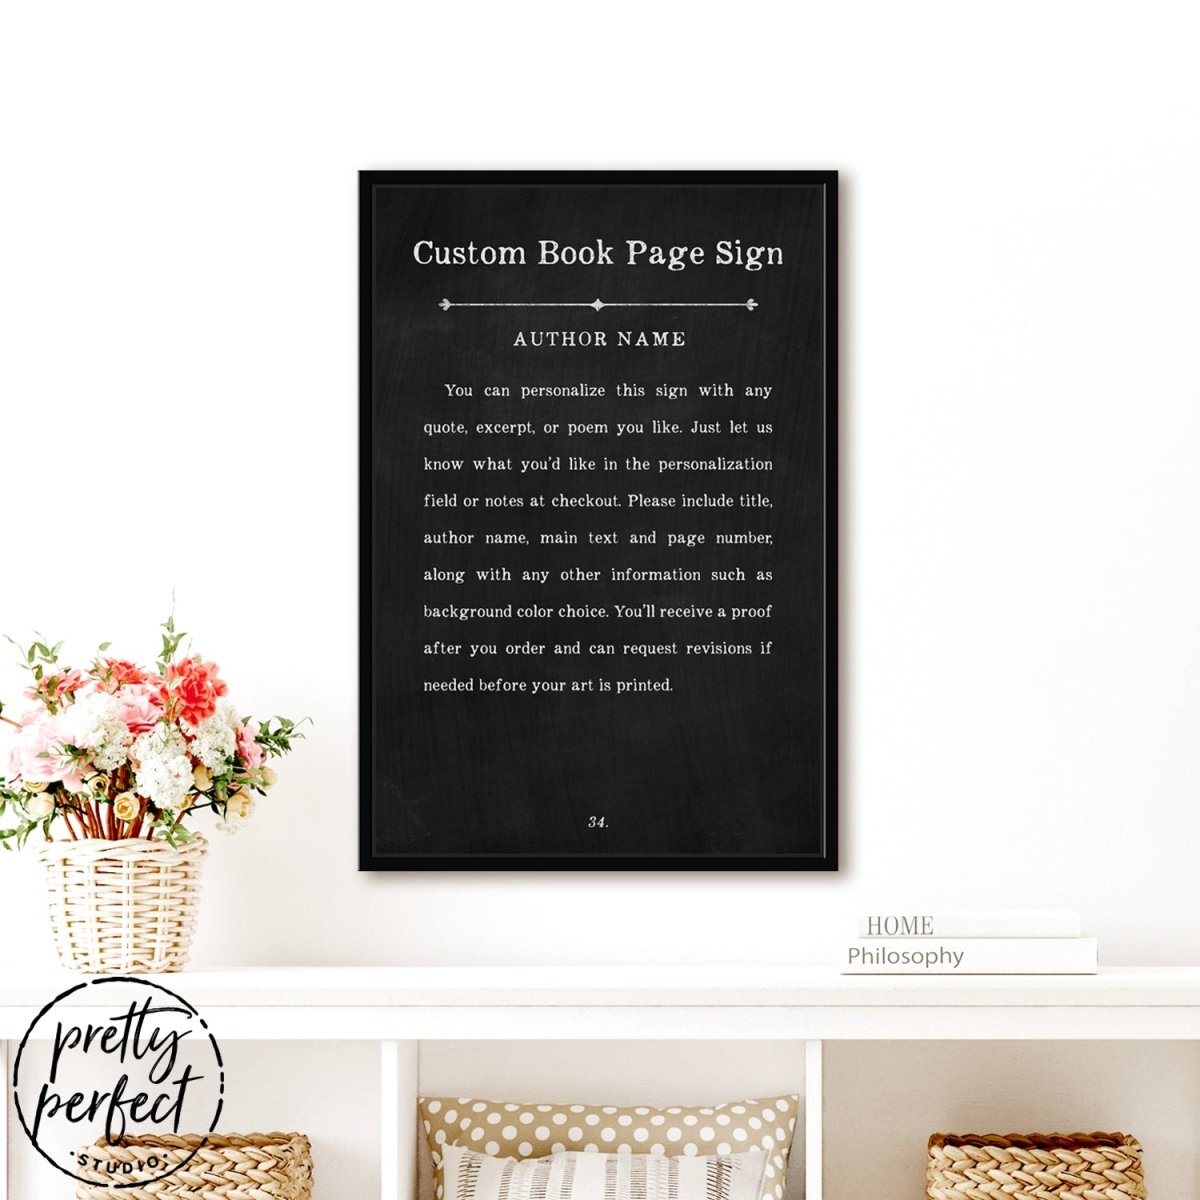 Custom Book Page Sign Above Shelf - Pretty Perfect Studio